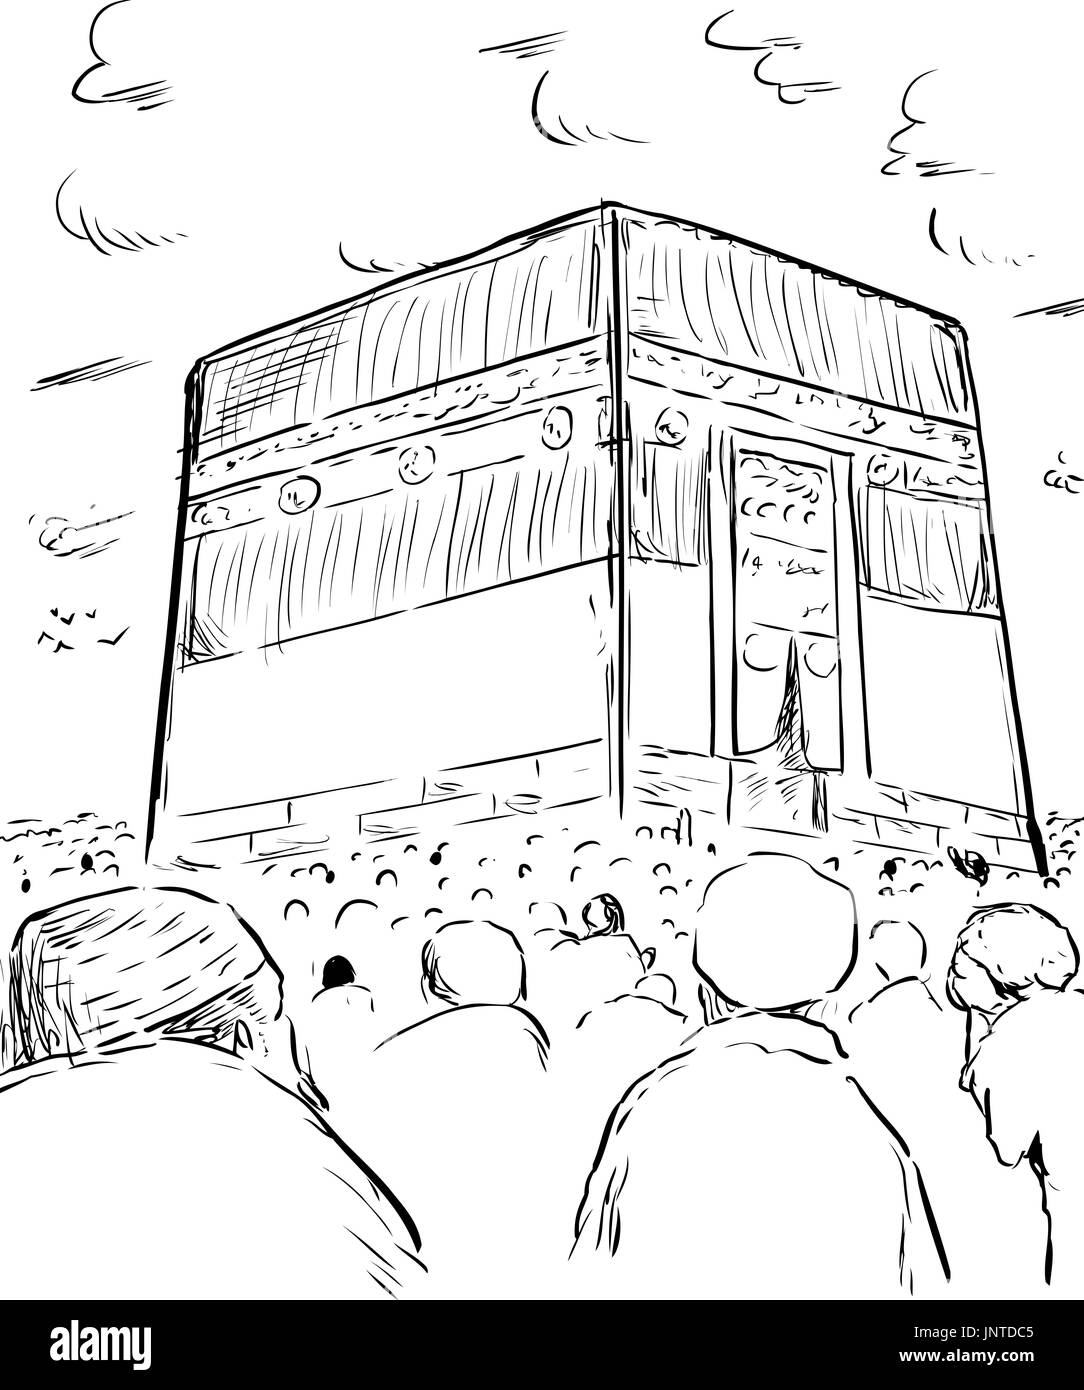 Grundrissskizze der frommen muslimische Pilger montiert um die Kaaba in Mekka, Arabien Stockfoto